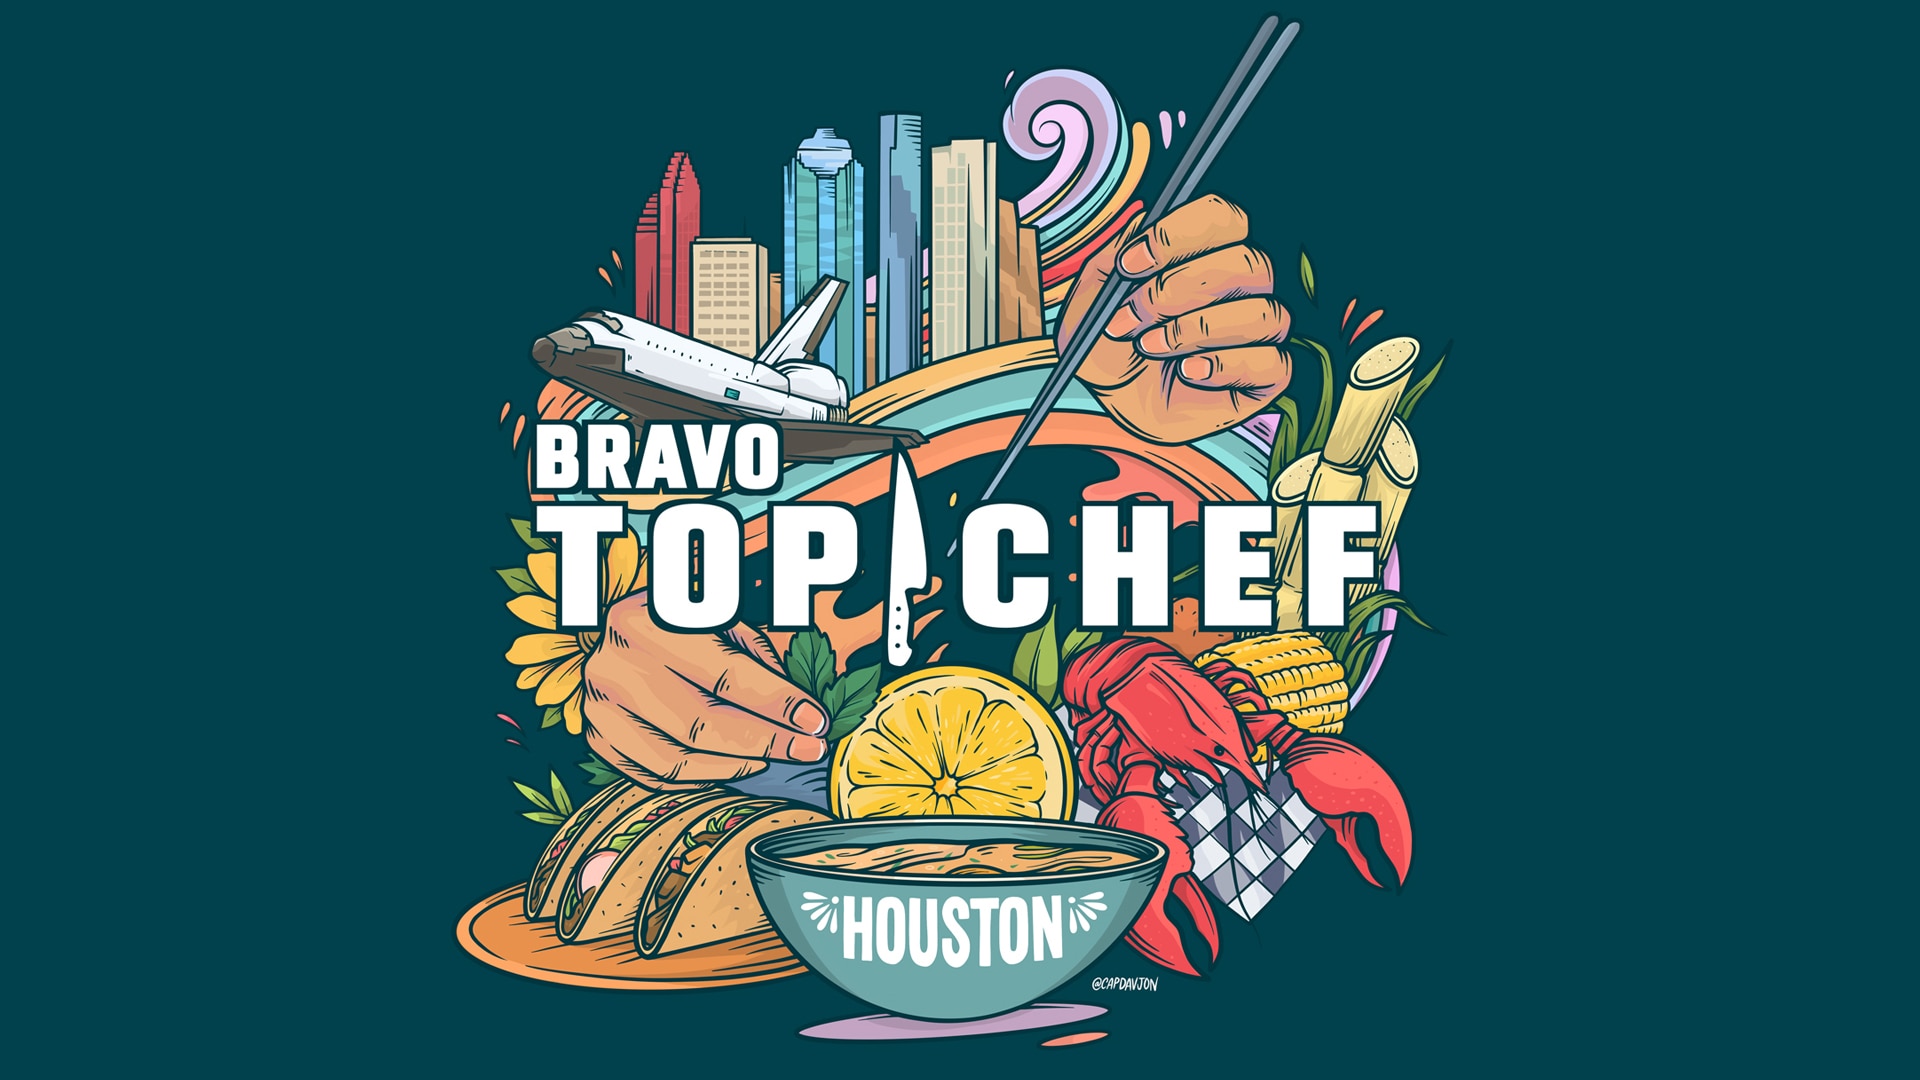 Top Chefkoch Houston Ankündigung